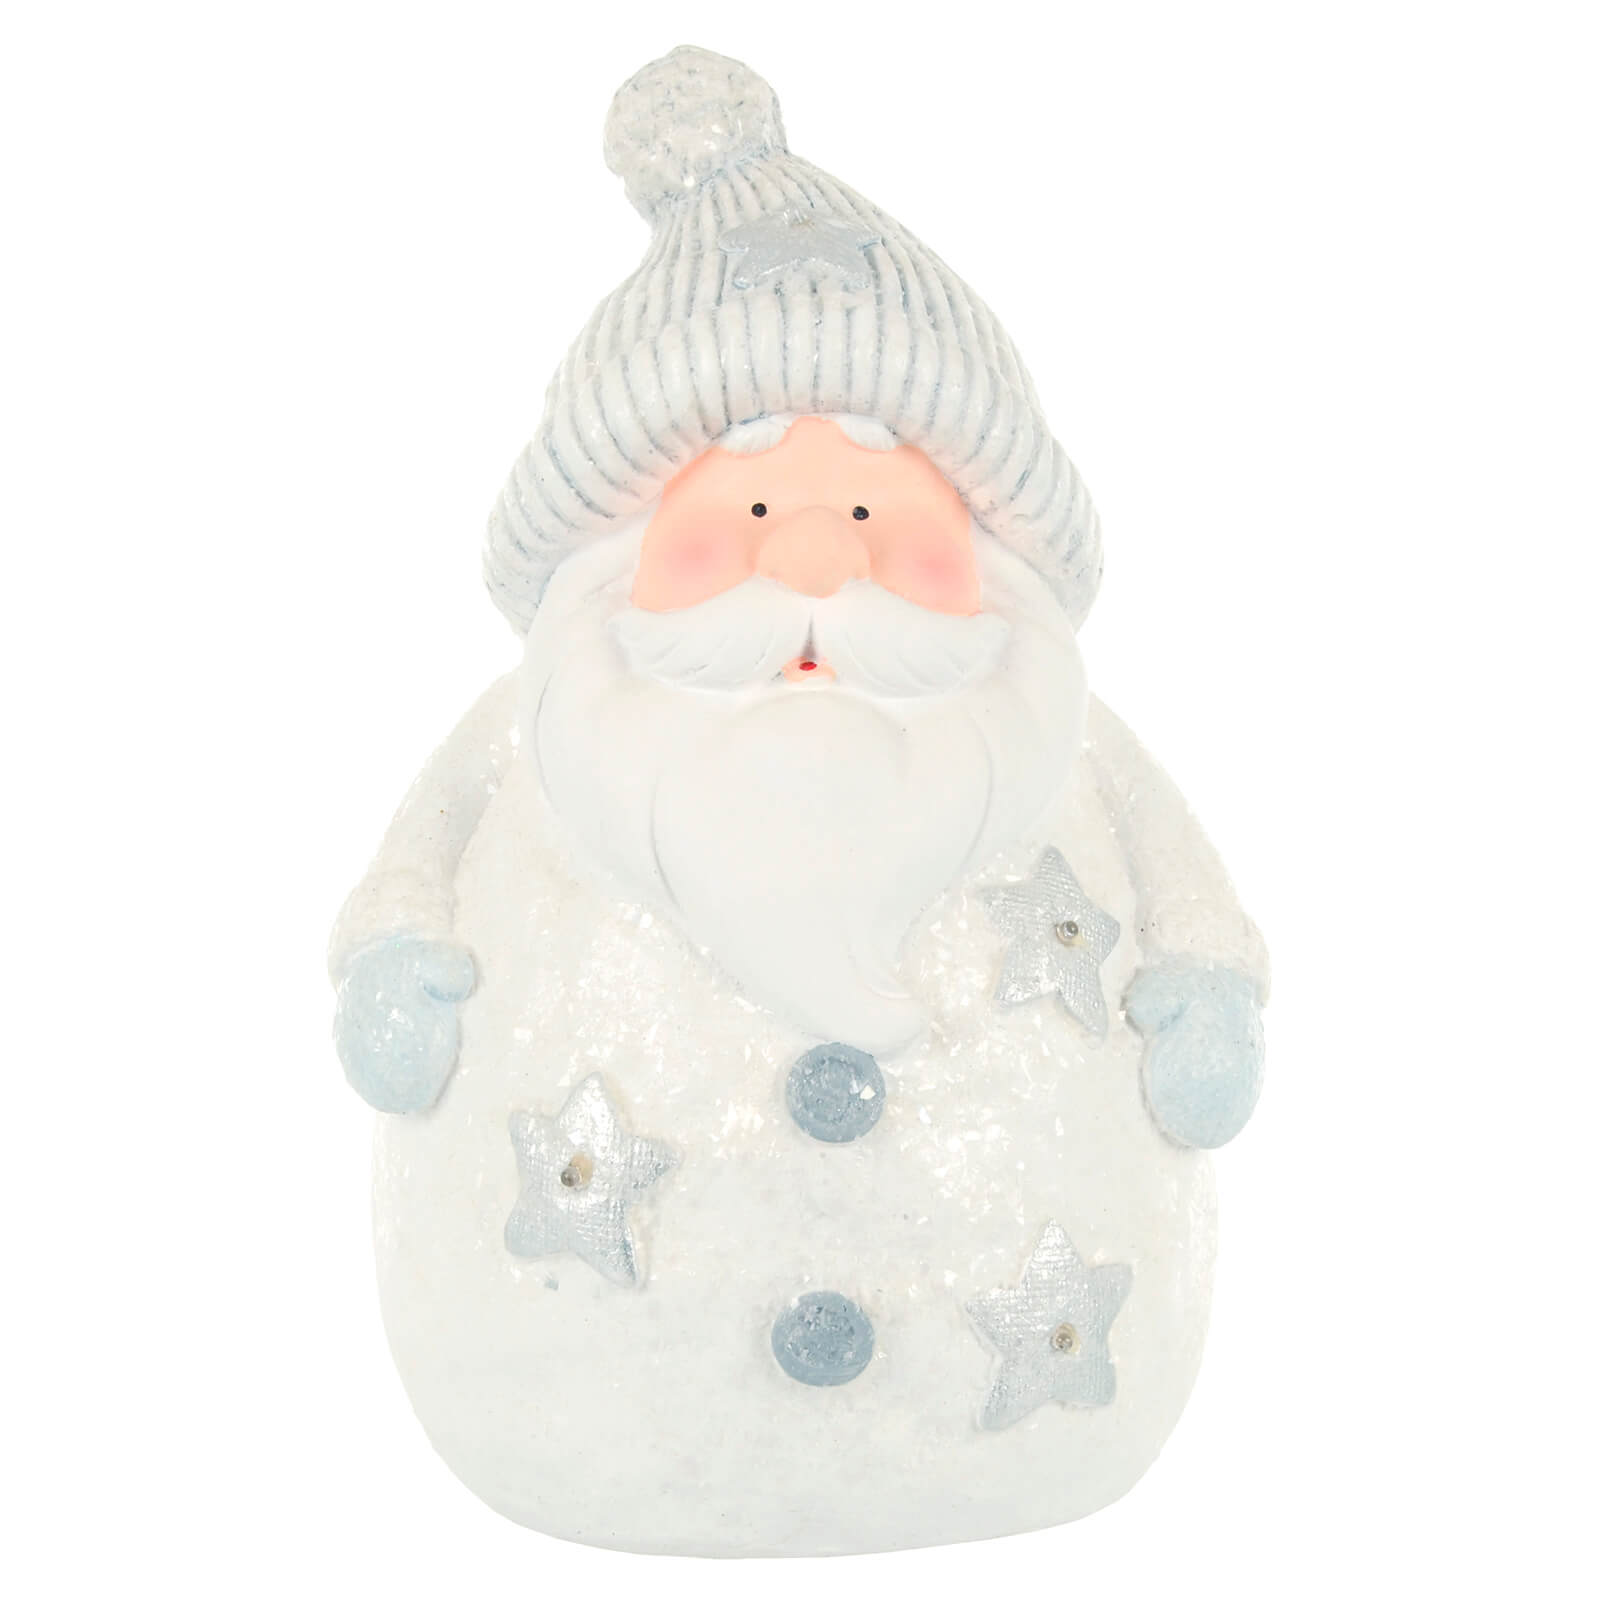 Mr Crimbo Light Up Christmas Snowman Santa White Blue Ceramic 37cm - MrCrimbo.co.uk -XS7148 - Santa -